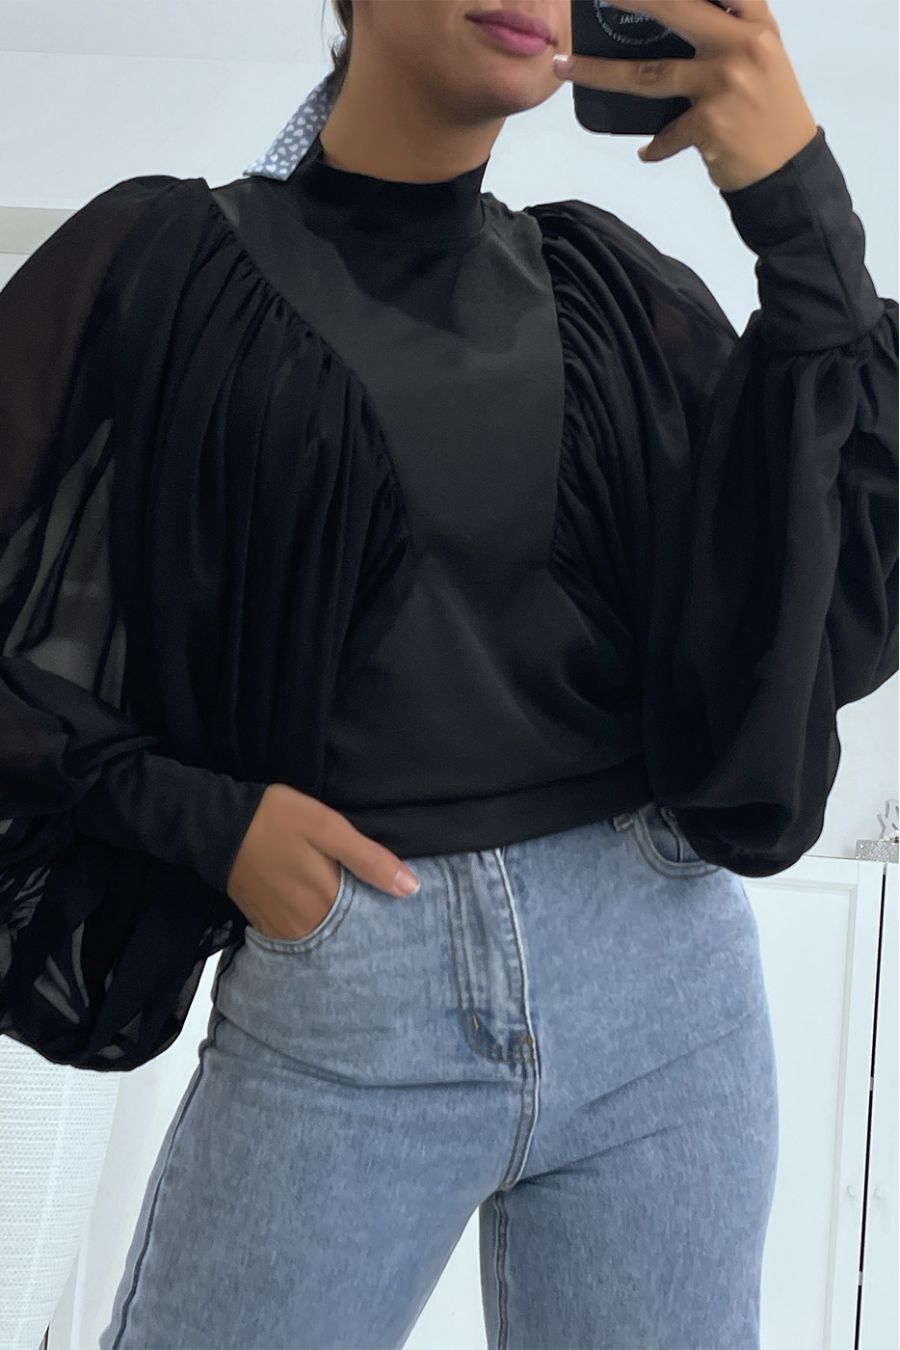 Schaar Vermomd Inschrijven Zwarte blouse